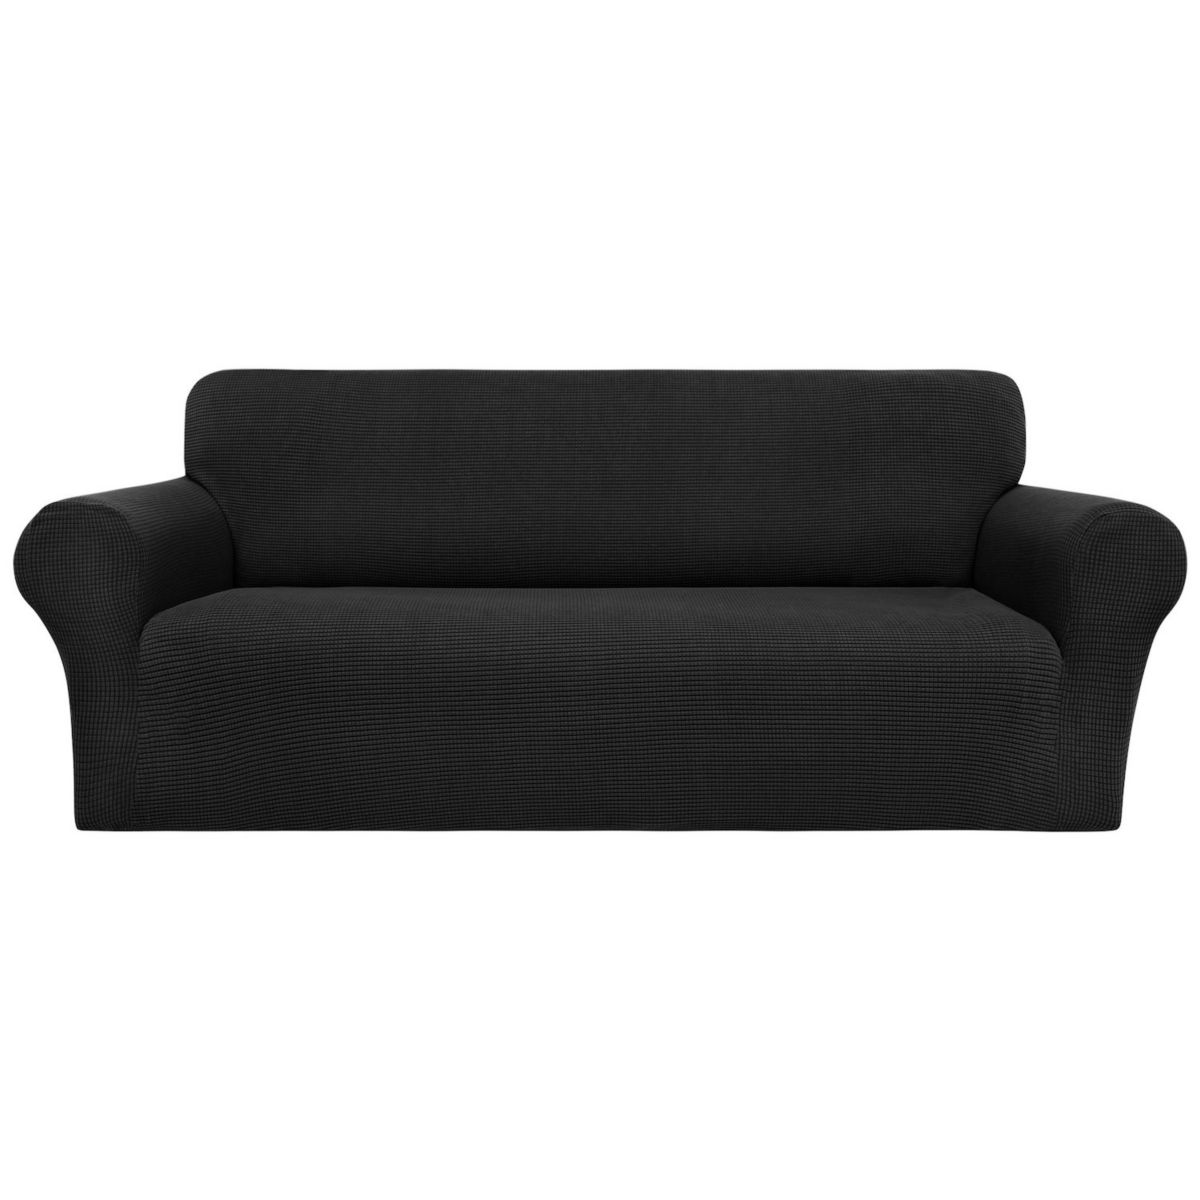 1Piece Stretch Textured Grid Sofa Slipcover Non-skid Couch Cover PiccoCasa